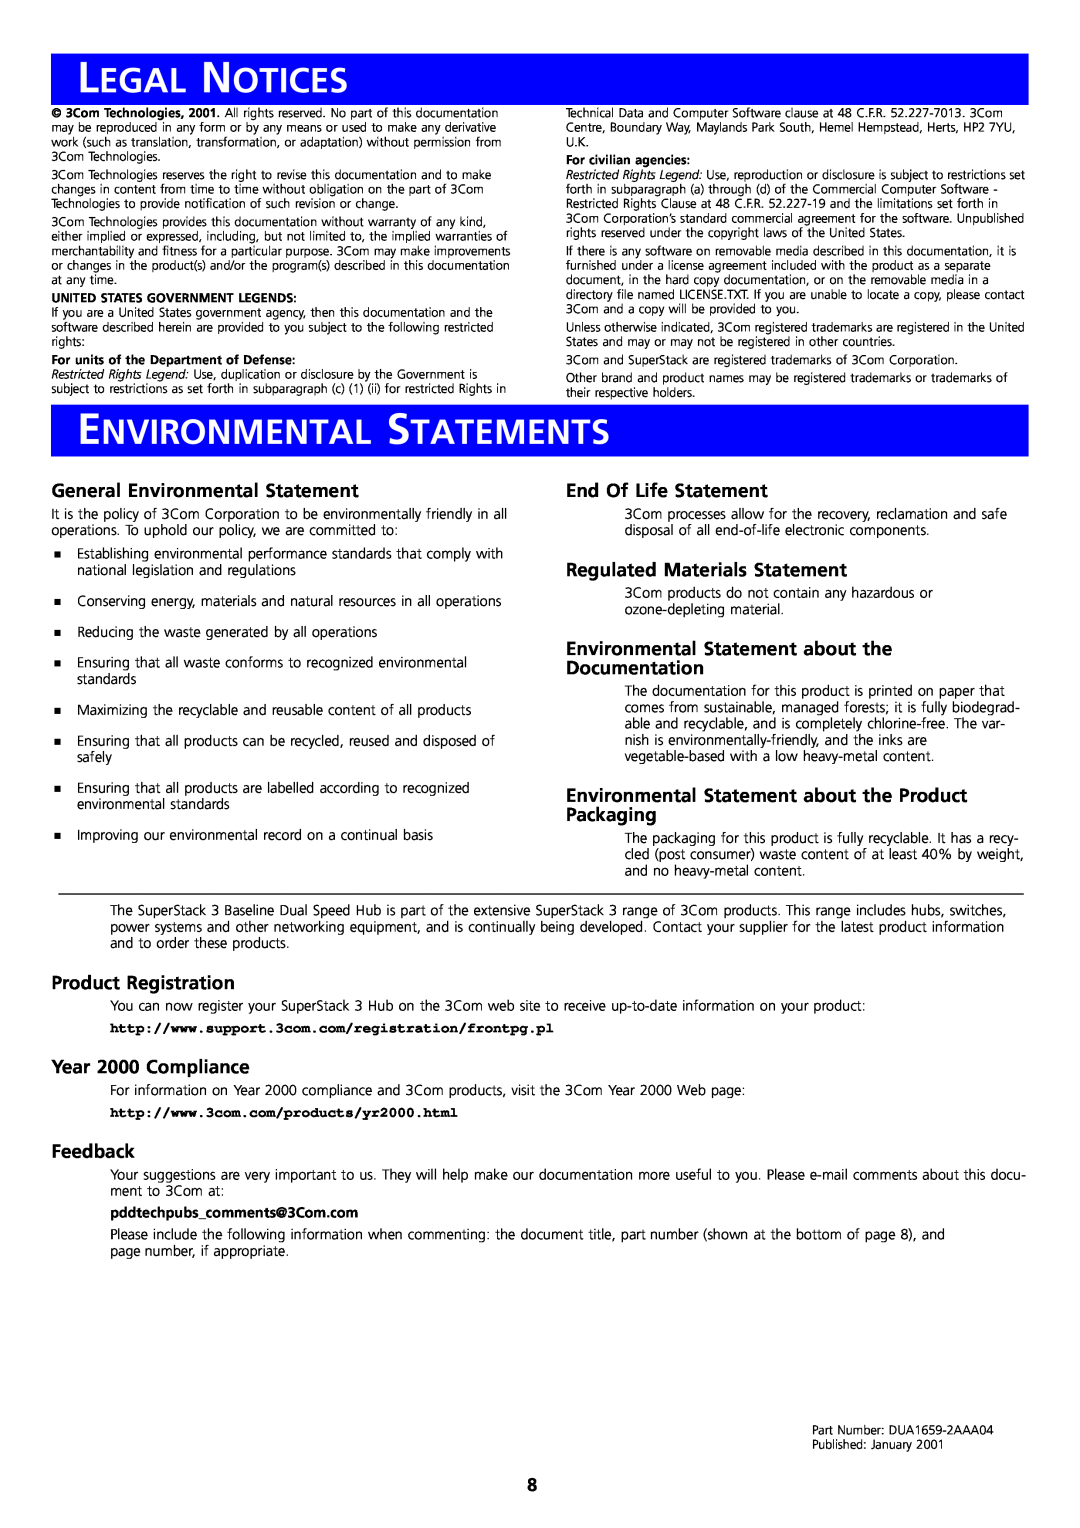 3Com 3C16592B, 3C16593B Legal Notices, Environmental Statements, General Environmental Statement, Product Registration 